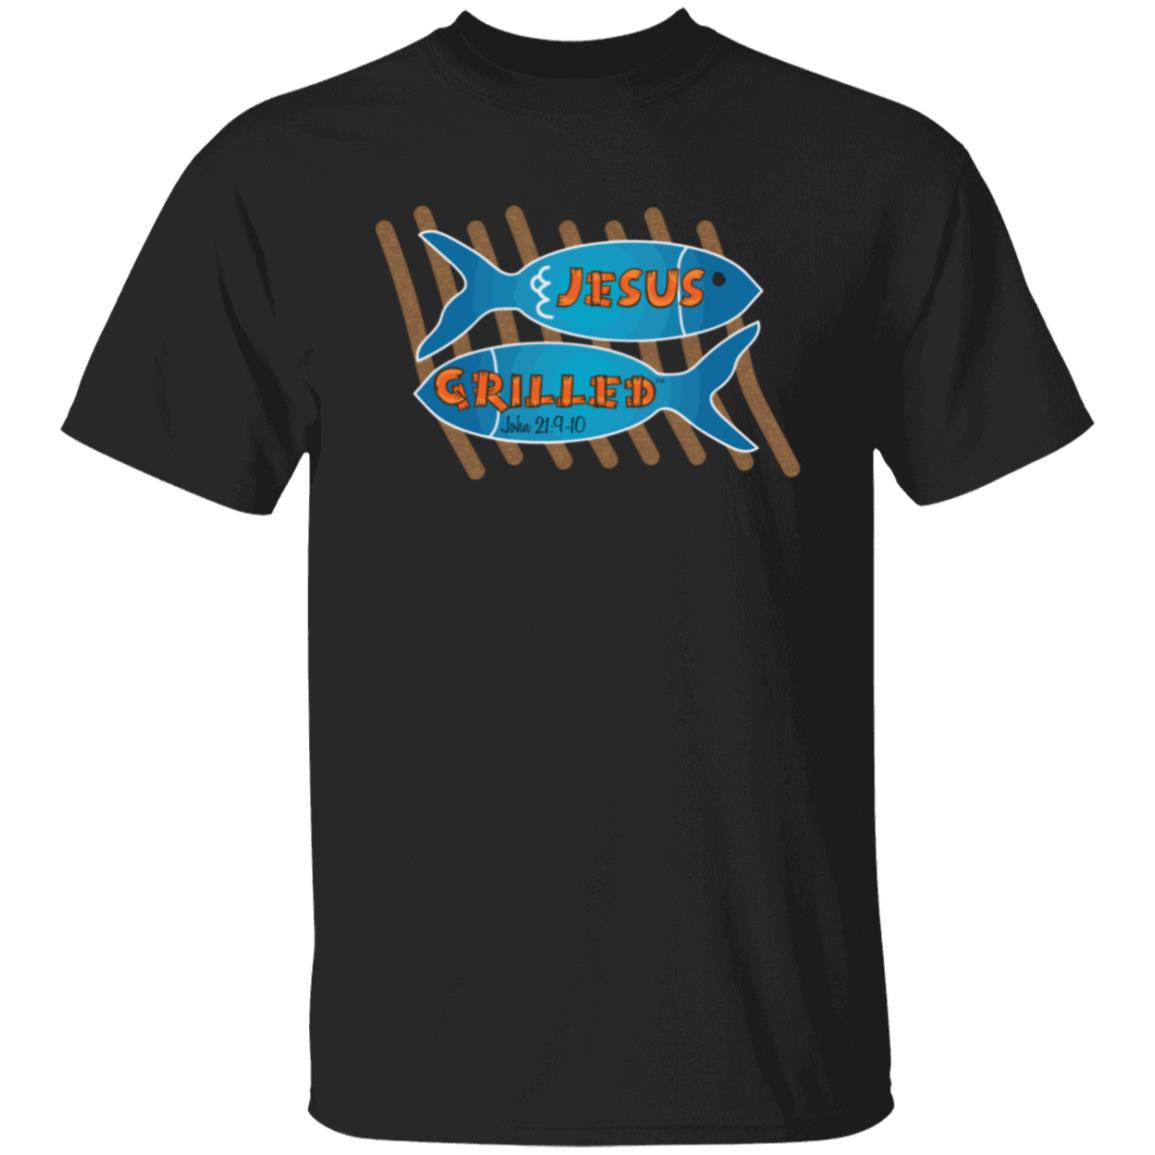 Grilled Fish Men's Cotton Short Sleeve T-Shirt – Jesus Surfed Apparel Co.